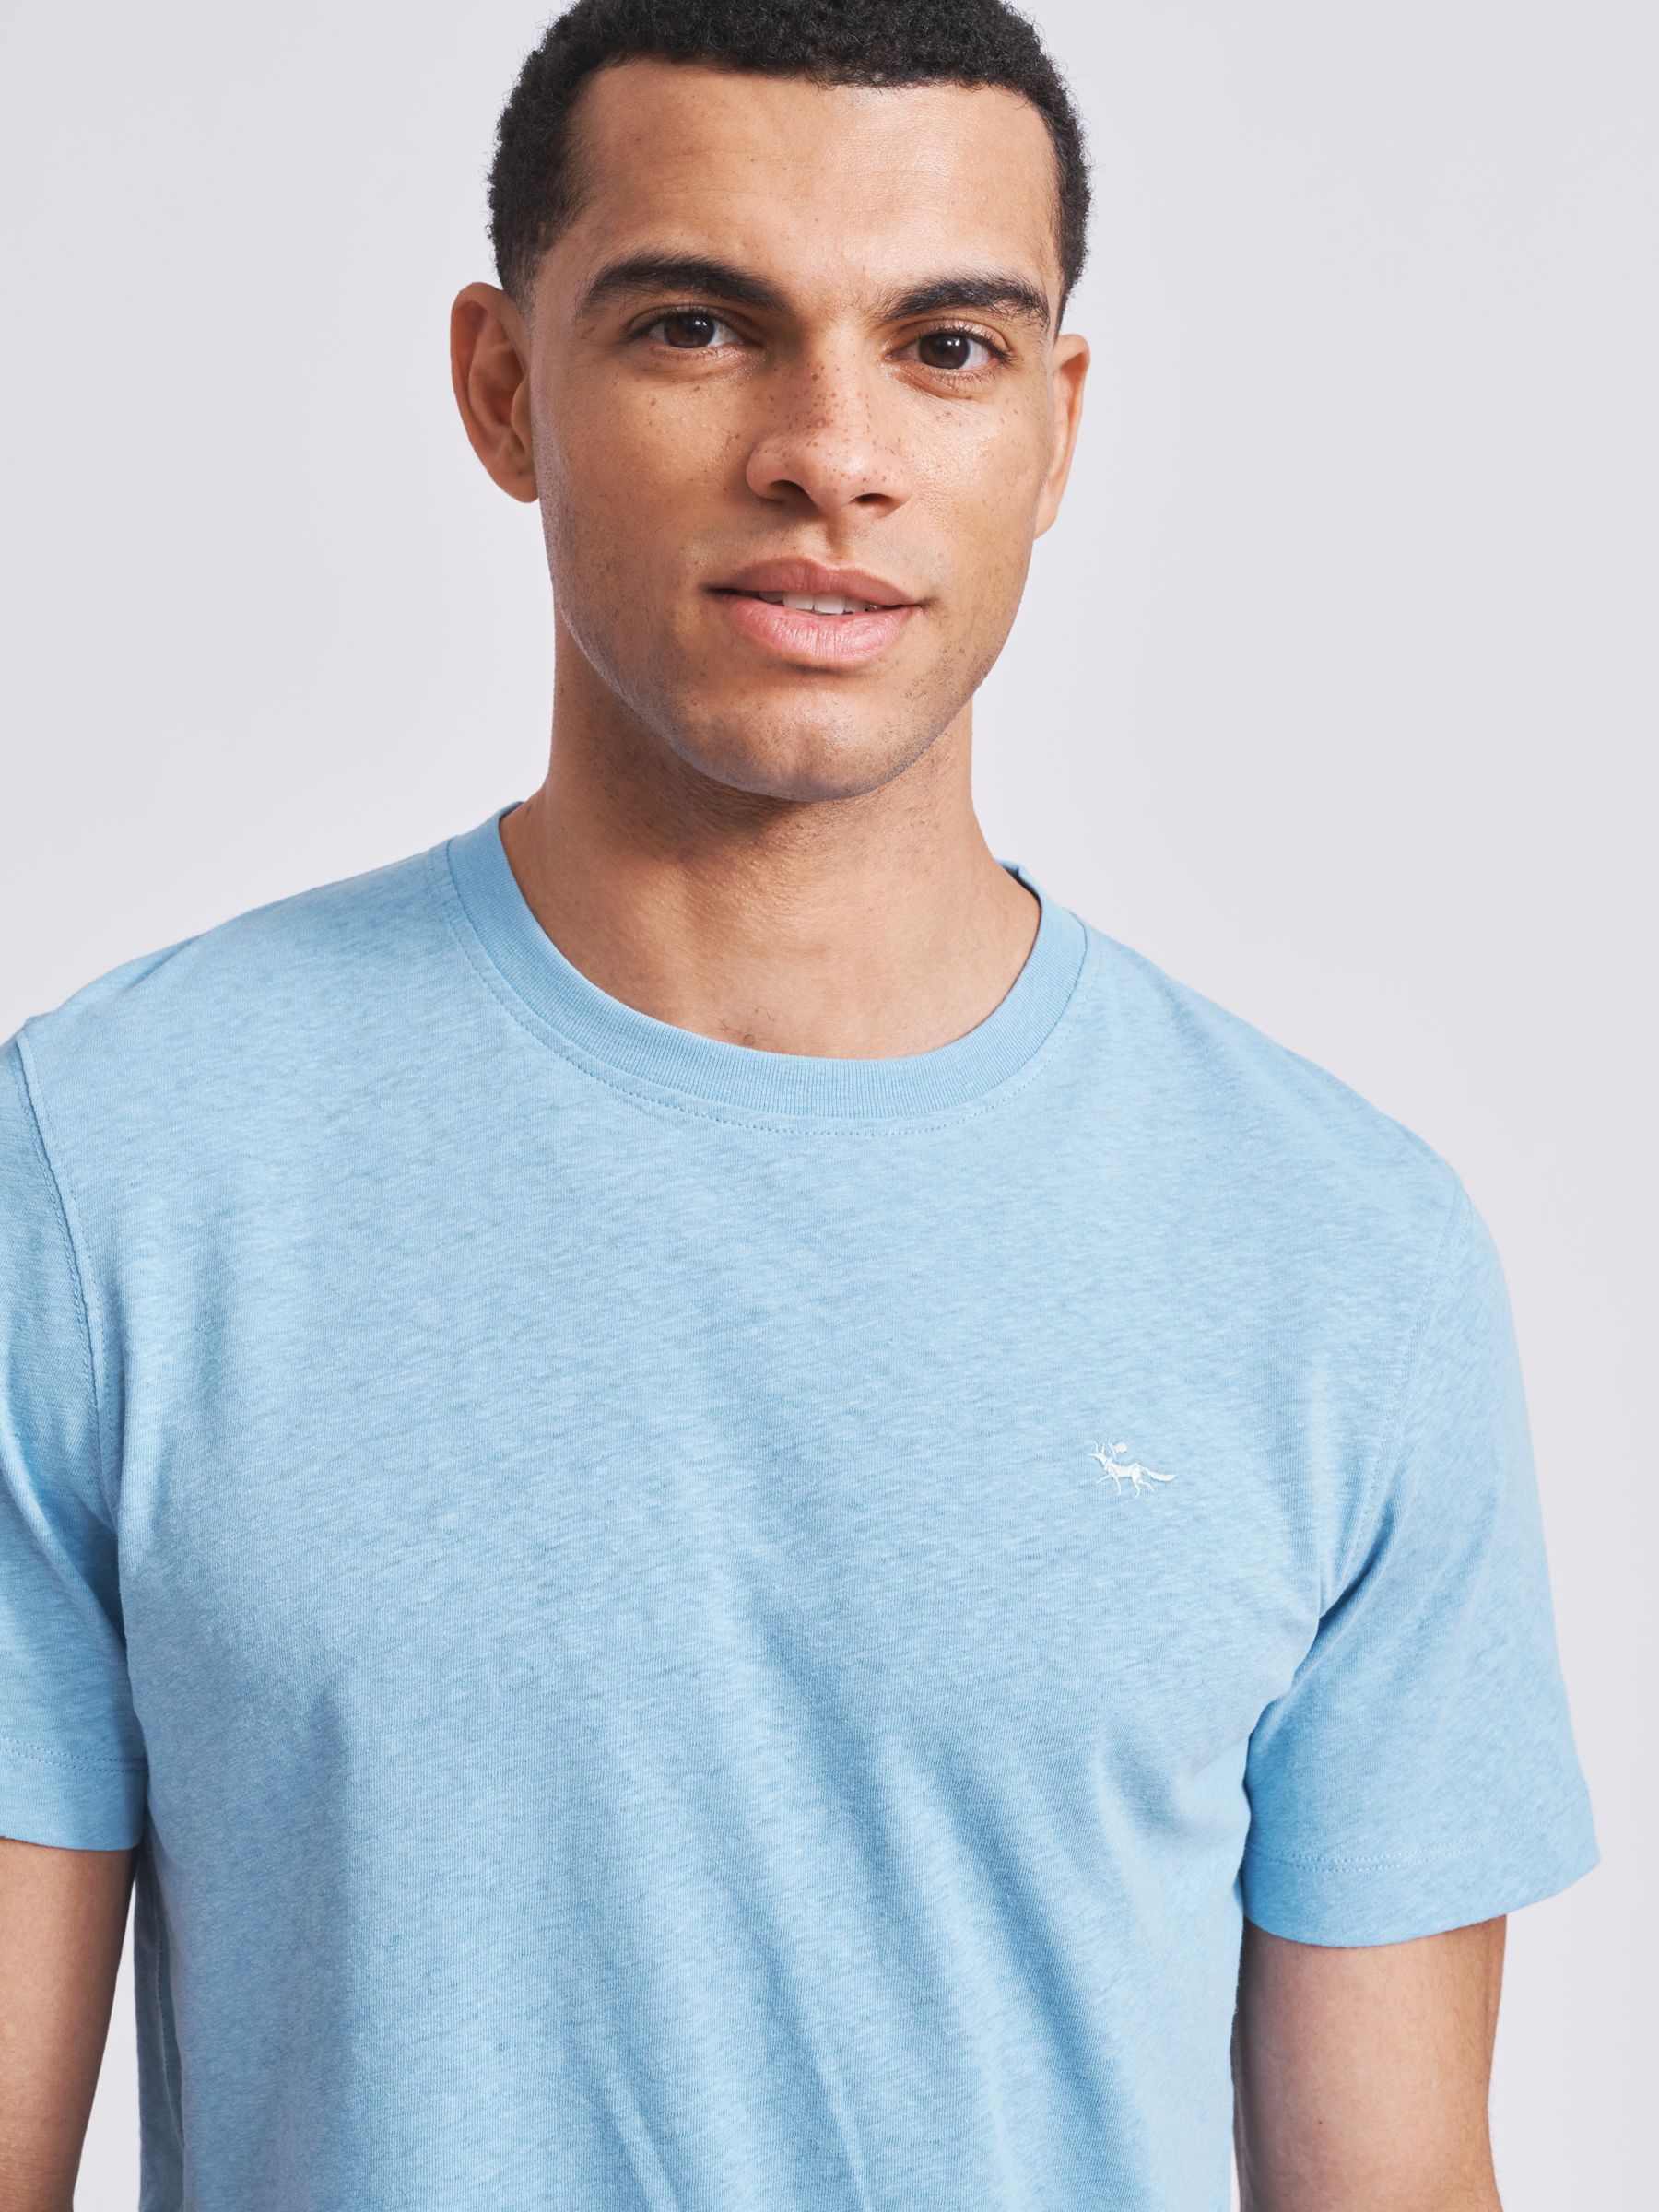 Aubin Hampton Cotton Linen T-Shirt, Blue, S